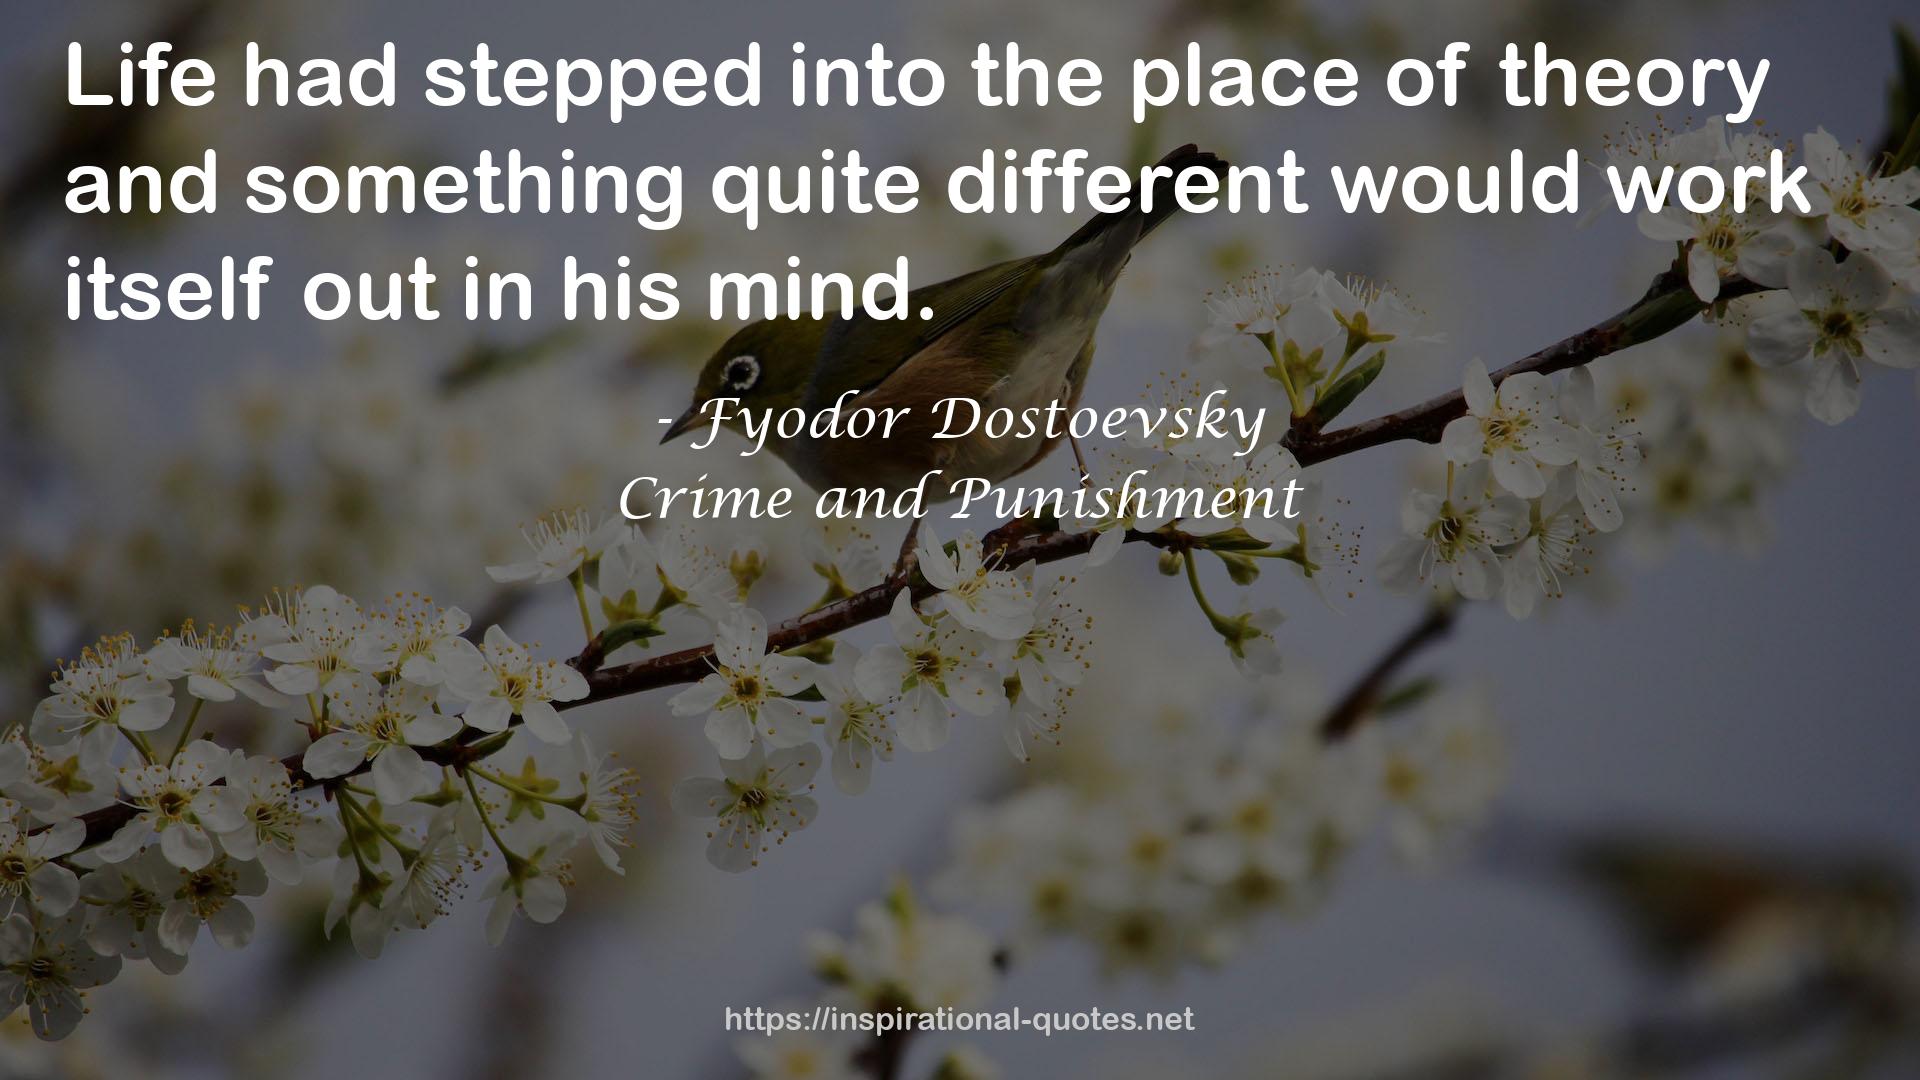 Fyodor Dostoevsky QUOTES